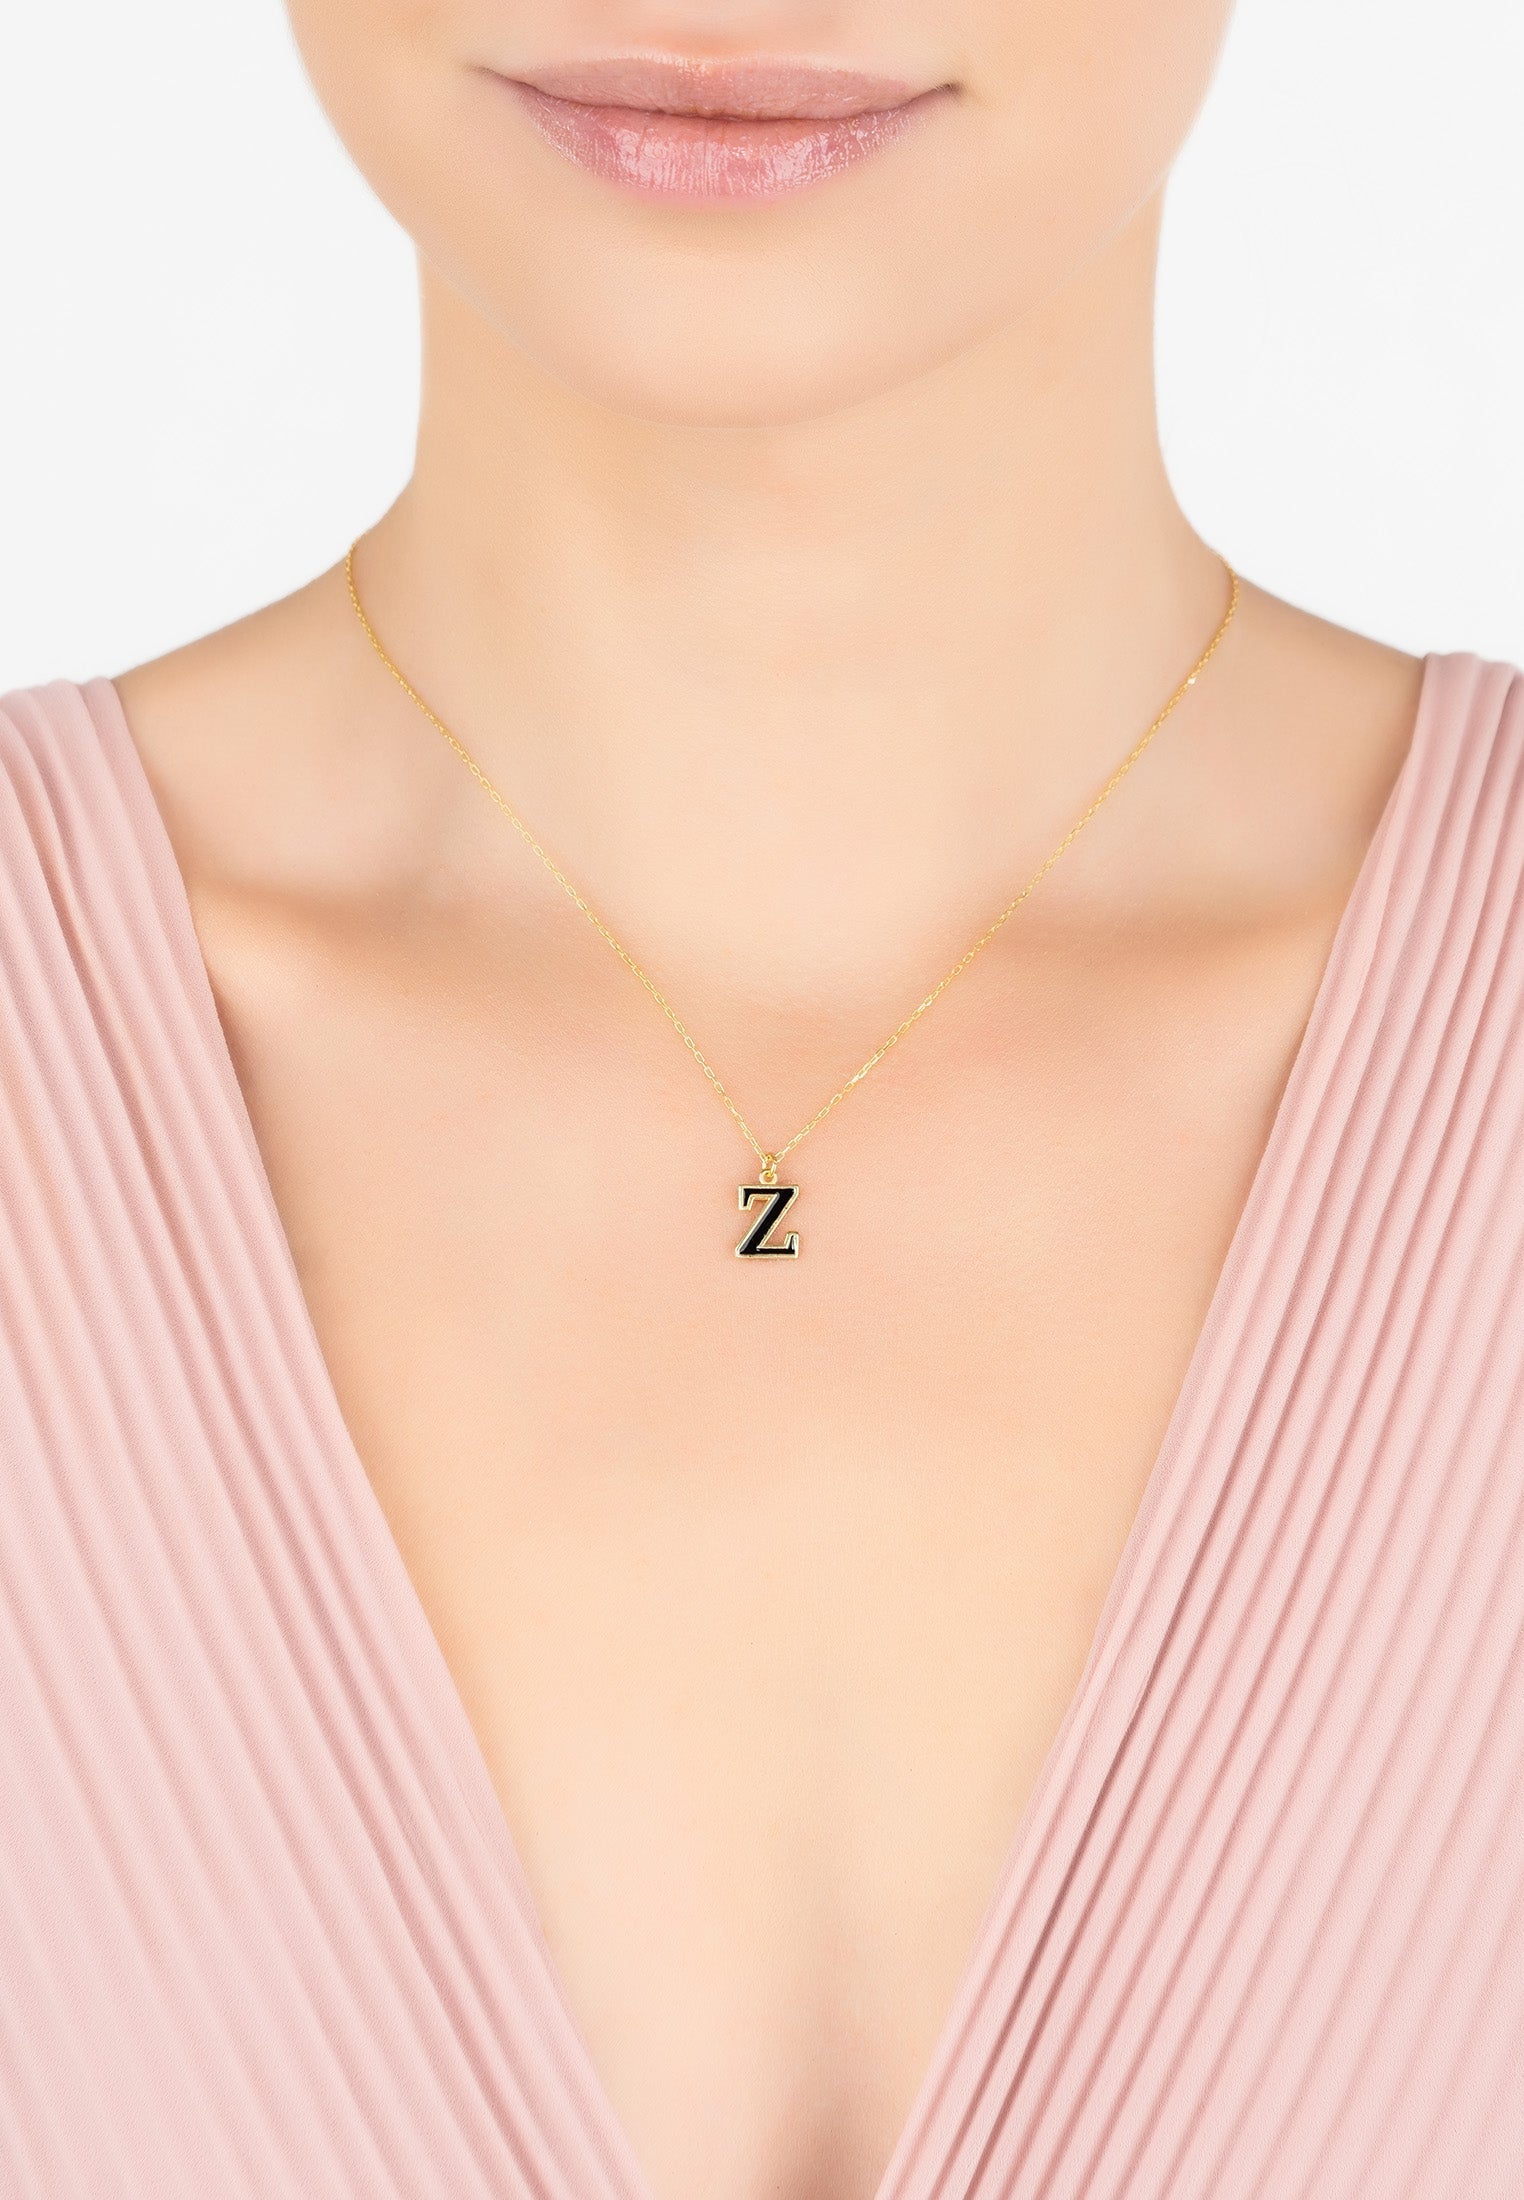 Gold Initial Enamel Pendant Necklace - Personalized Birthday Gift Idea Bijou Her